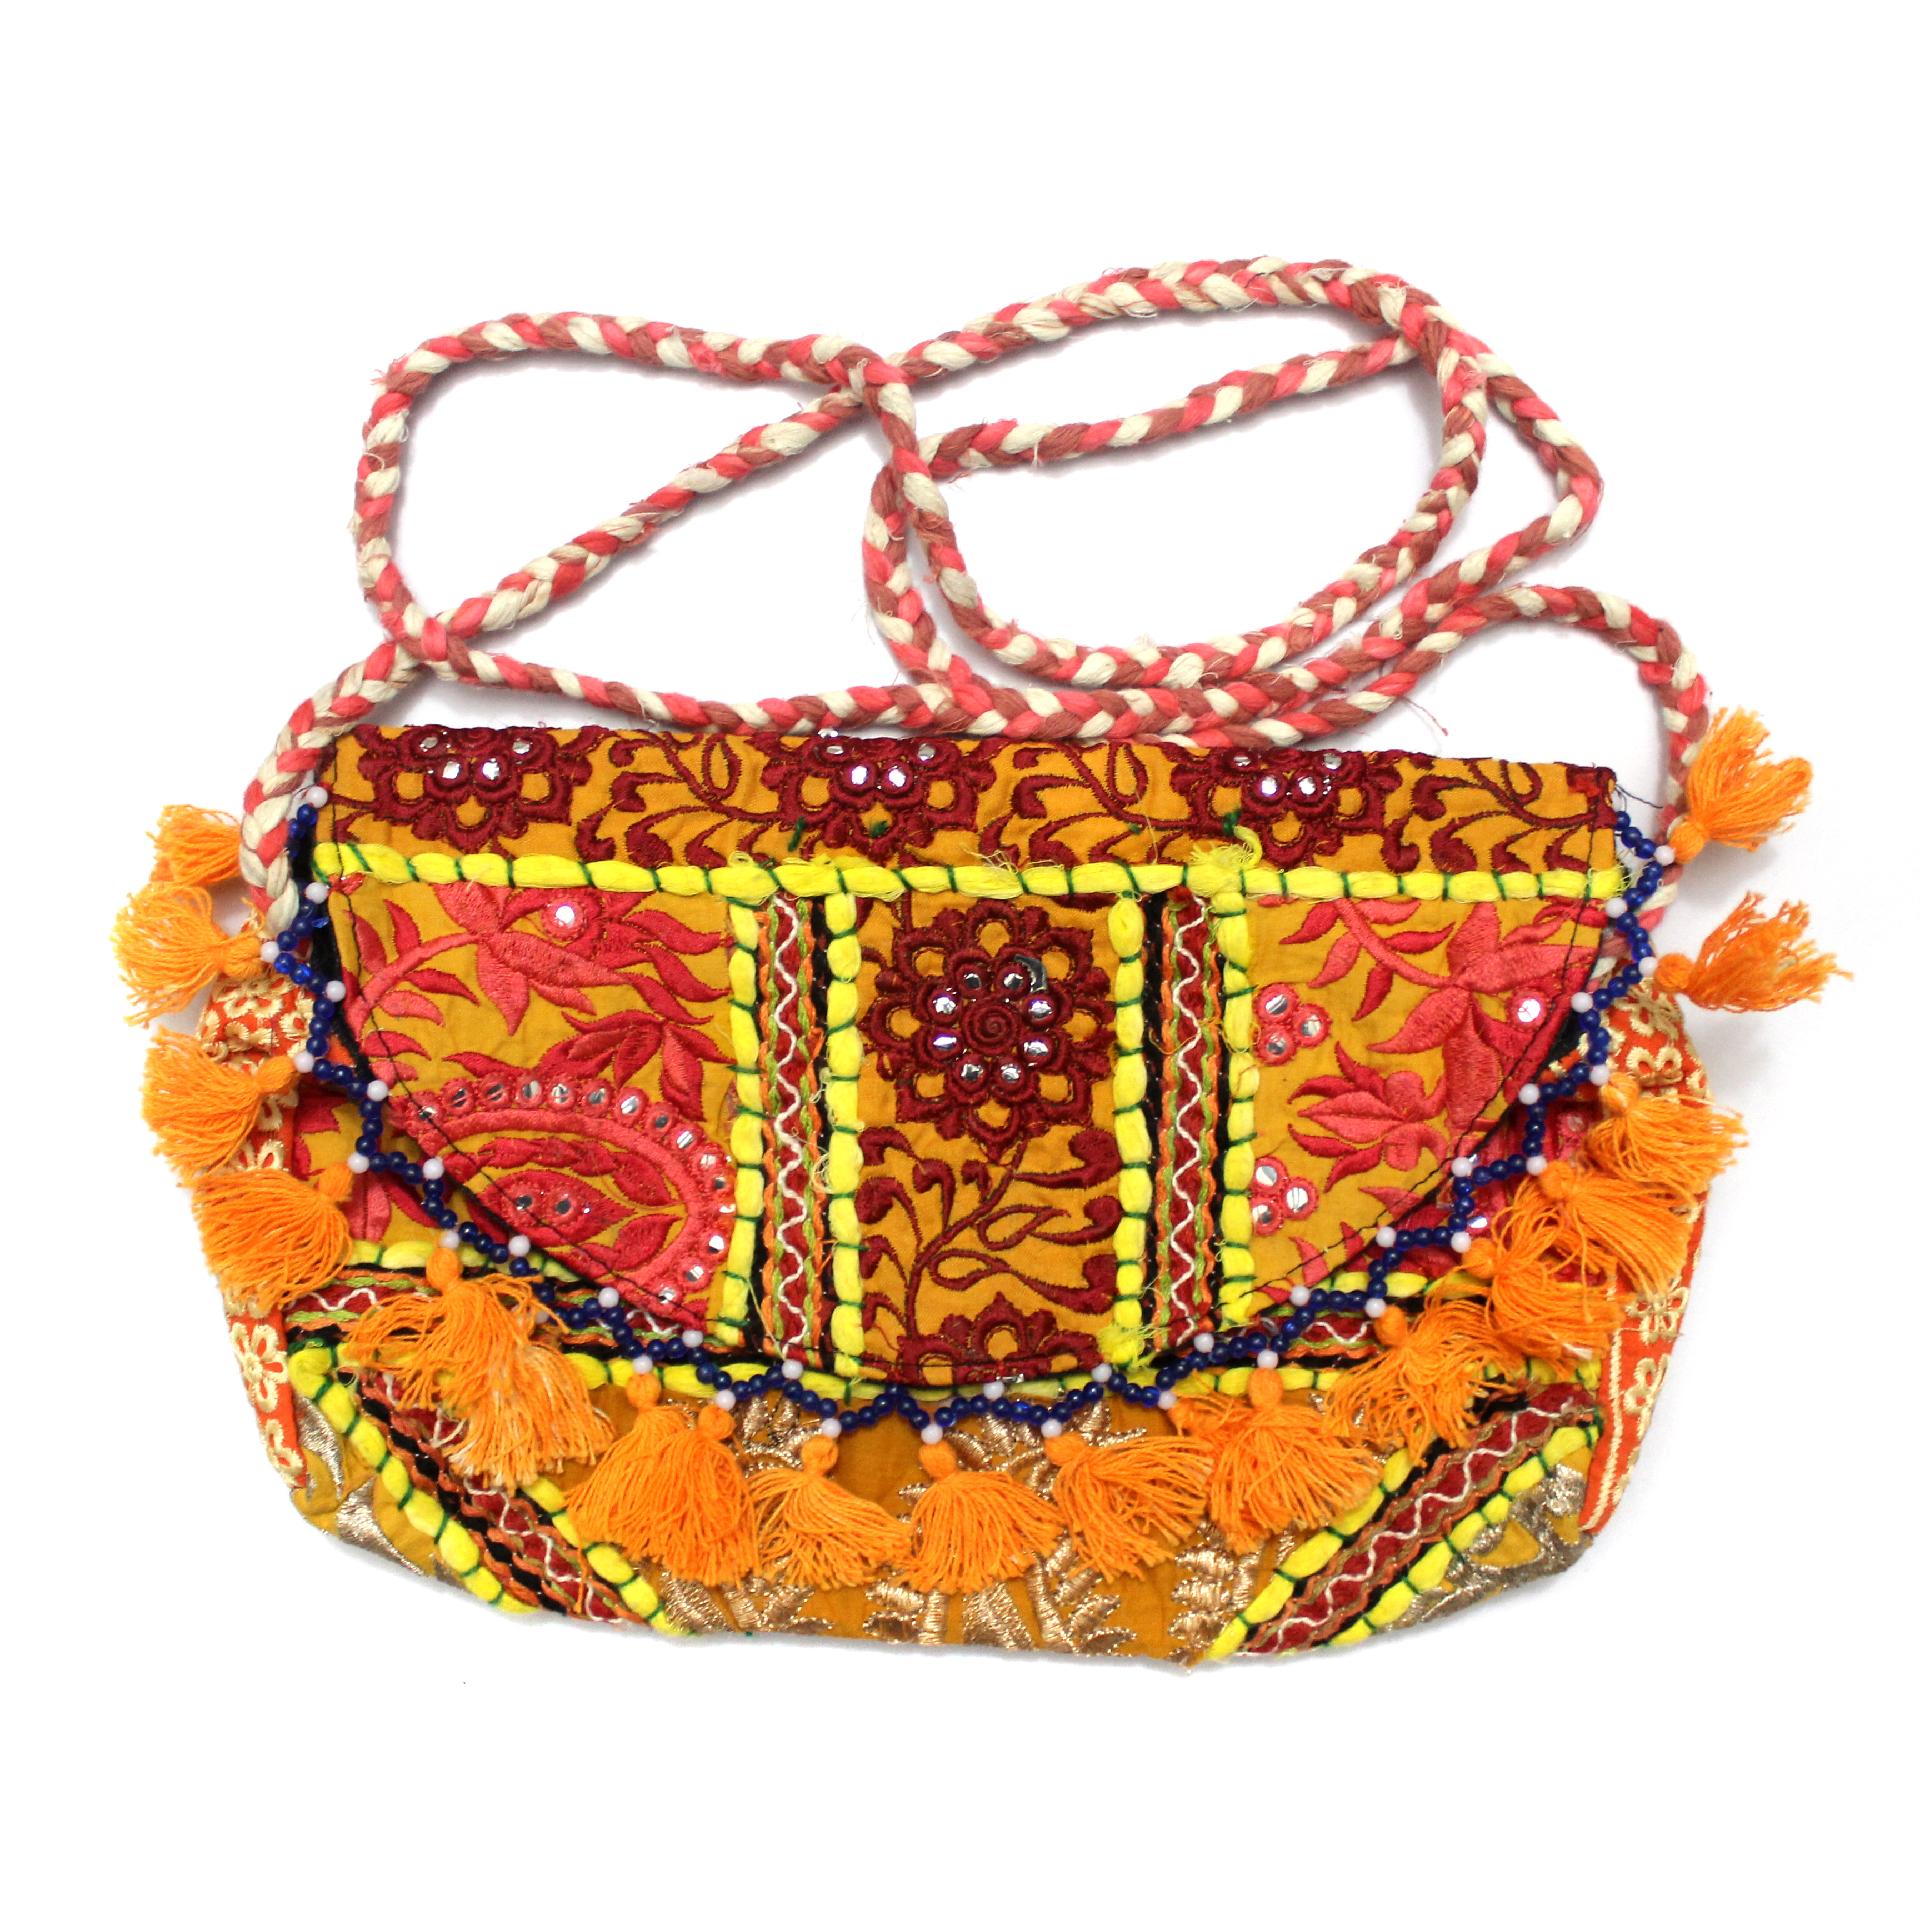 Vintage Tribal Banjara Indian Handmade Ethnic Women Purse Fashion Clutch Bag | eBay